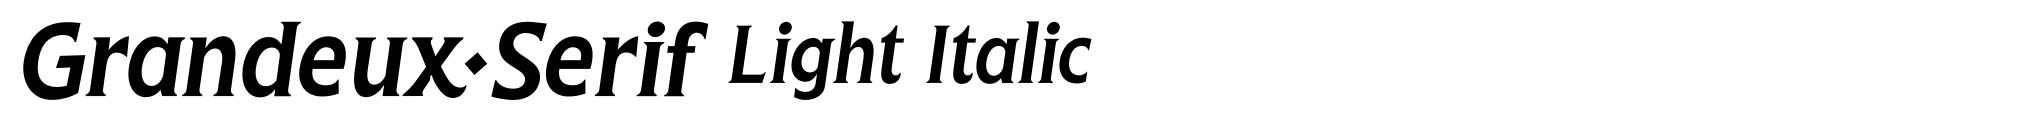 Grandeux Serif Light Italic image